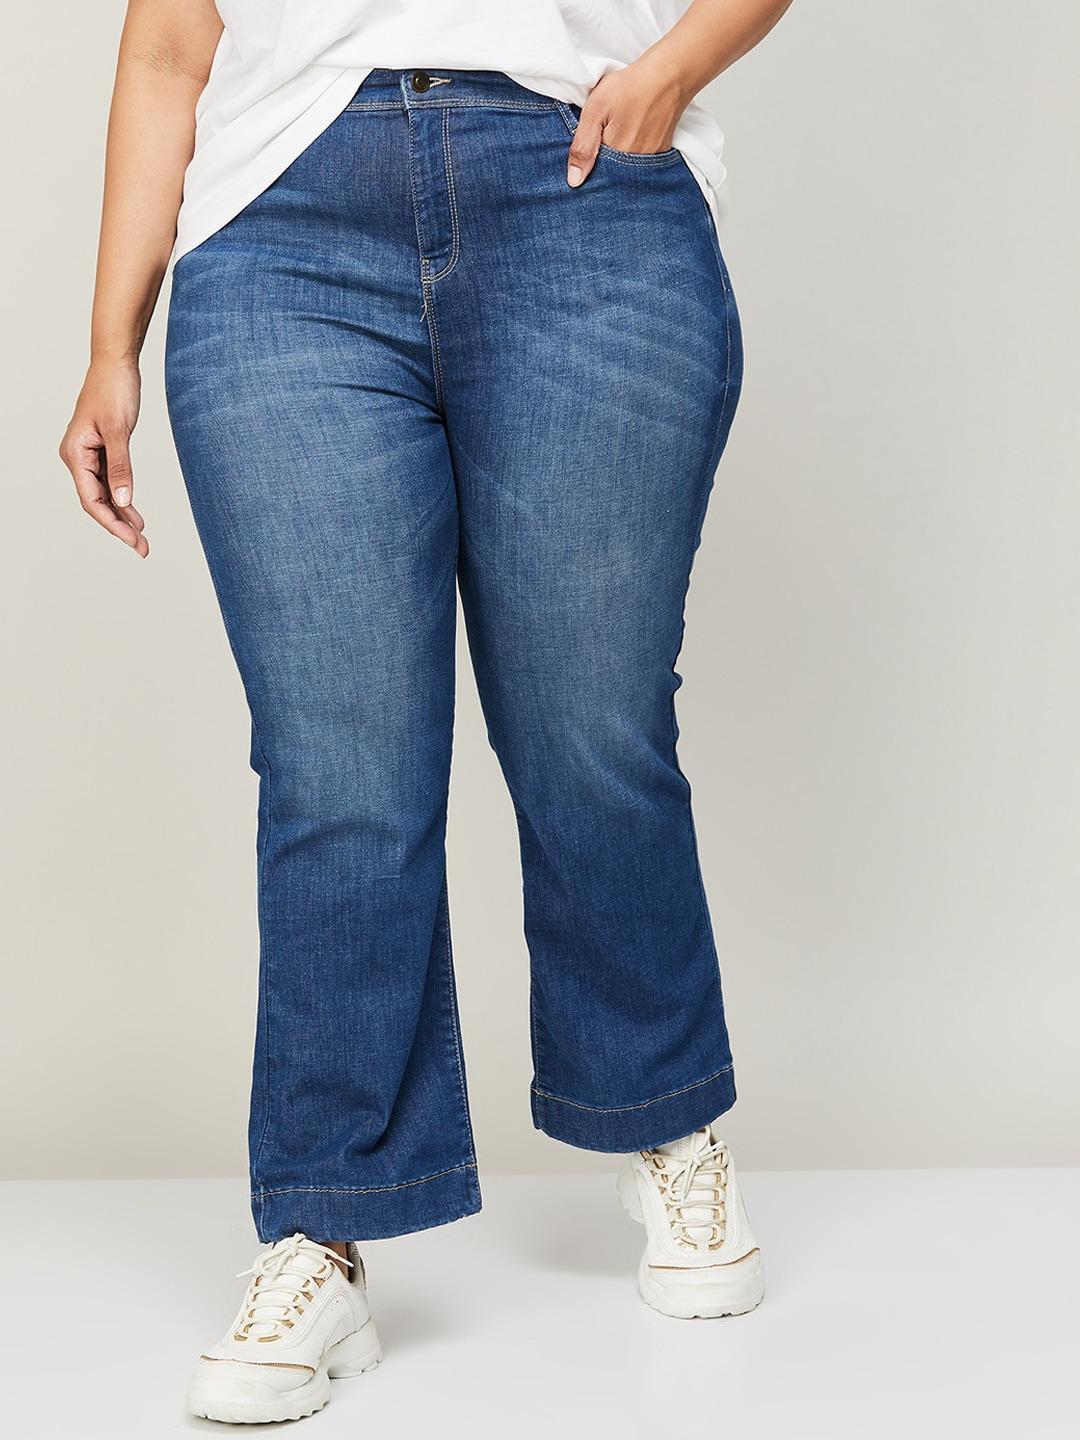 nexus women plus size high-rise light fade cotton jeans